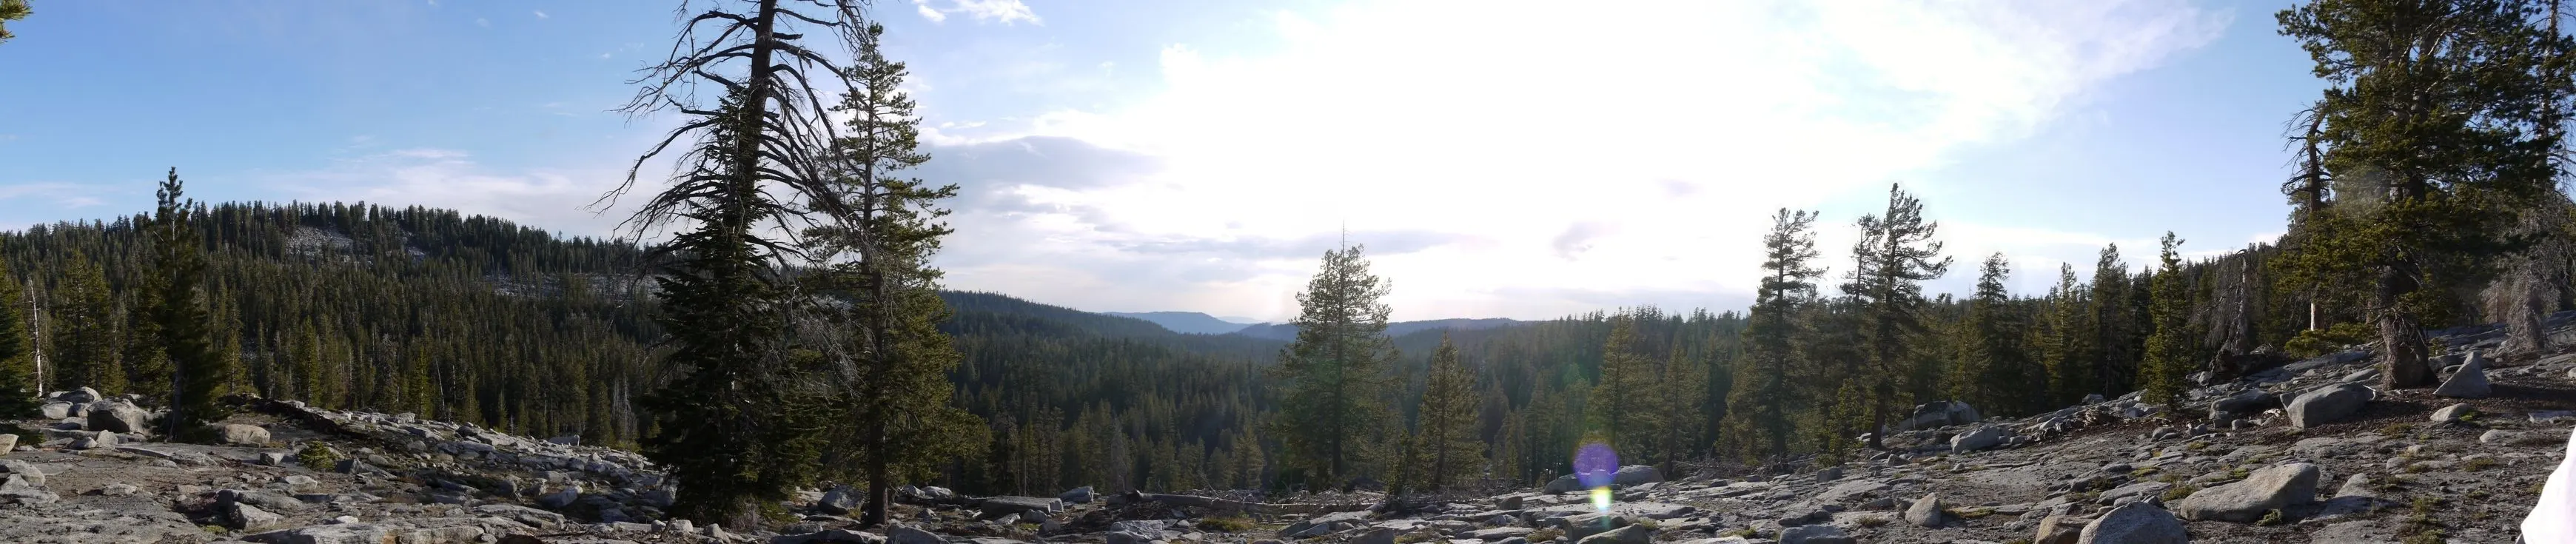 Yosemite sunset panorama